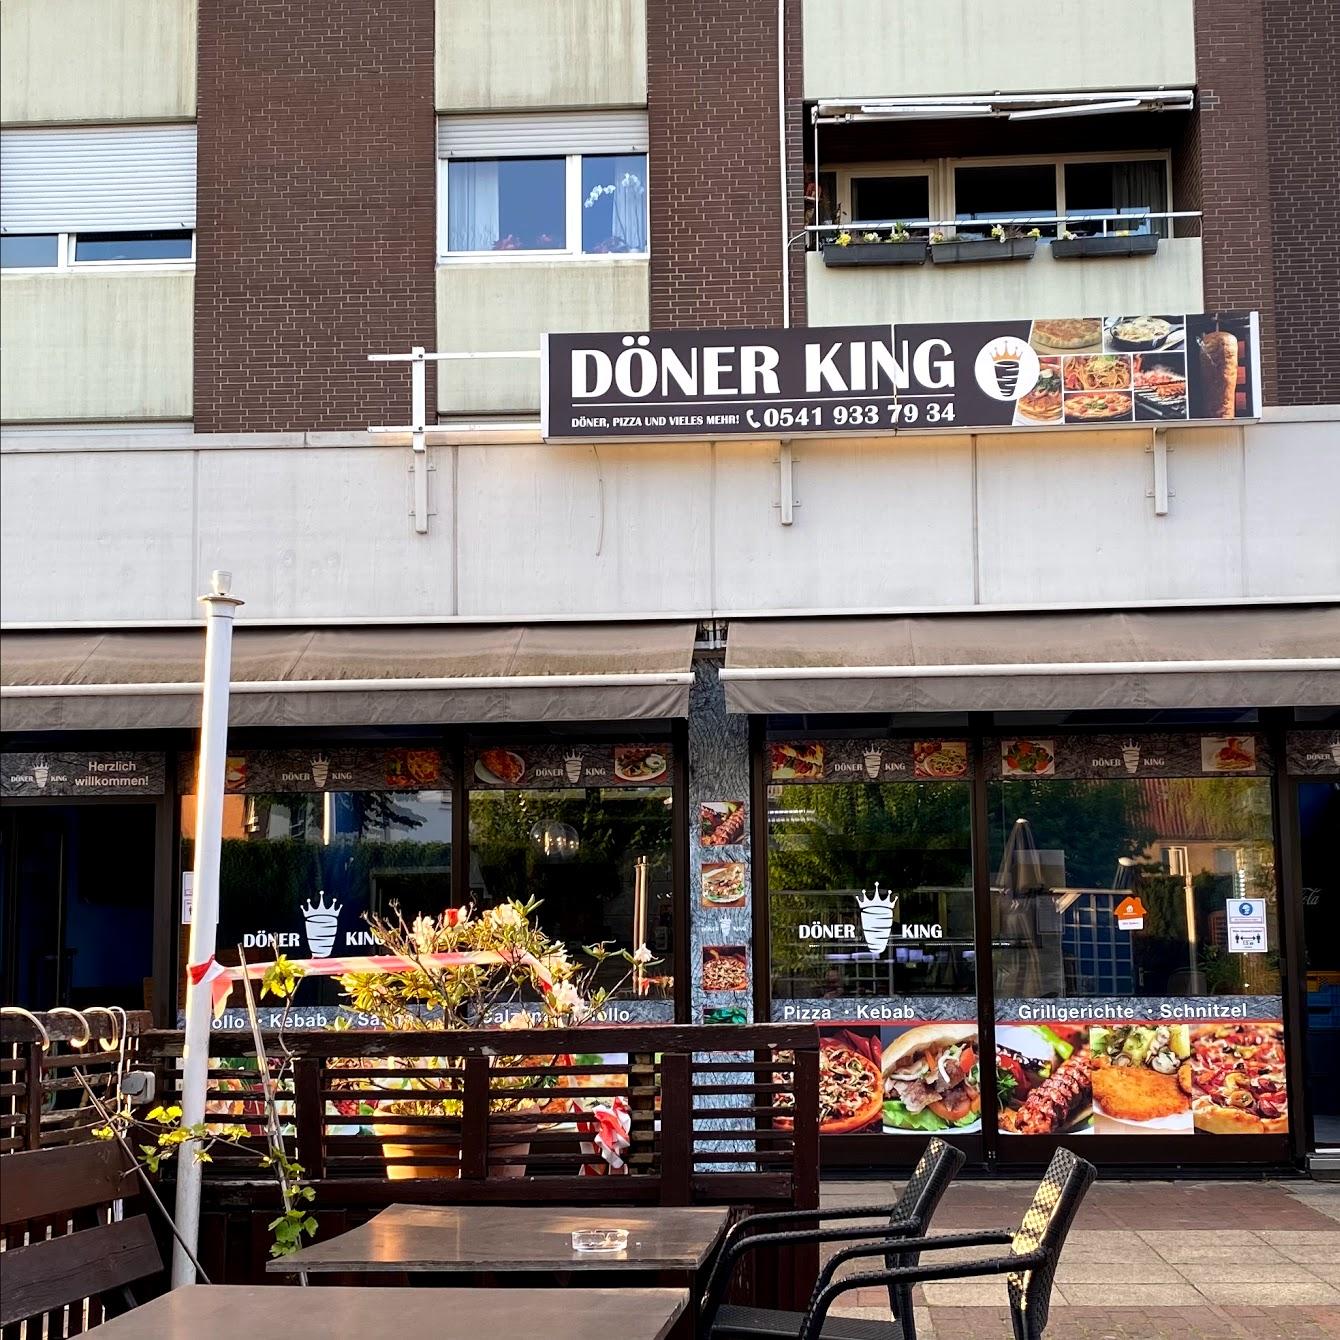 Restaurant "Döner King" in Osnabrück